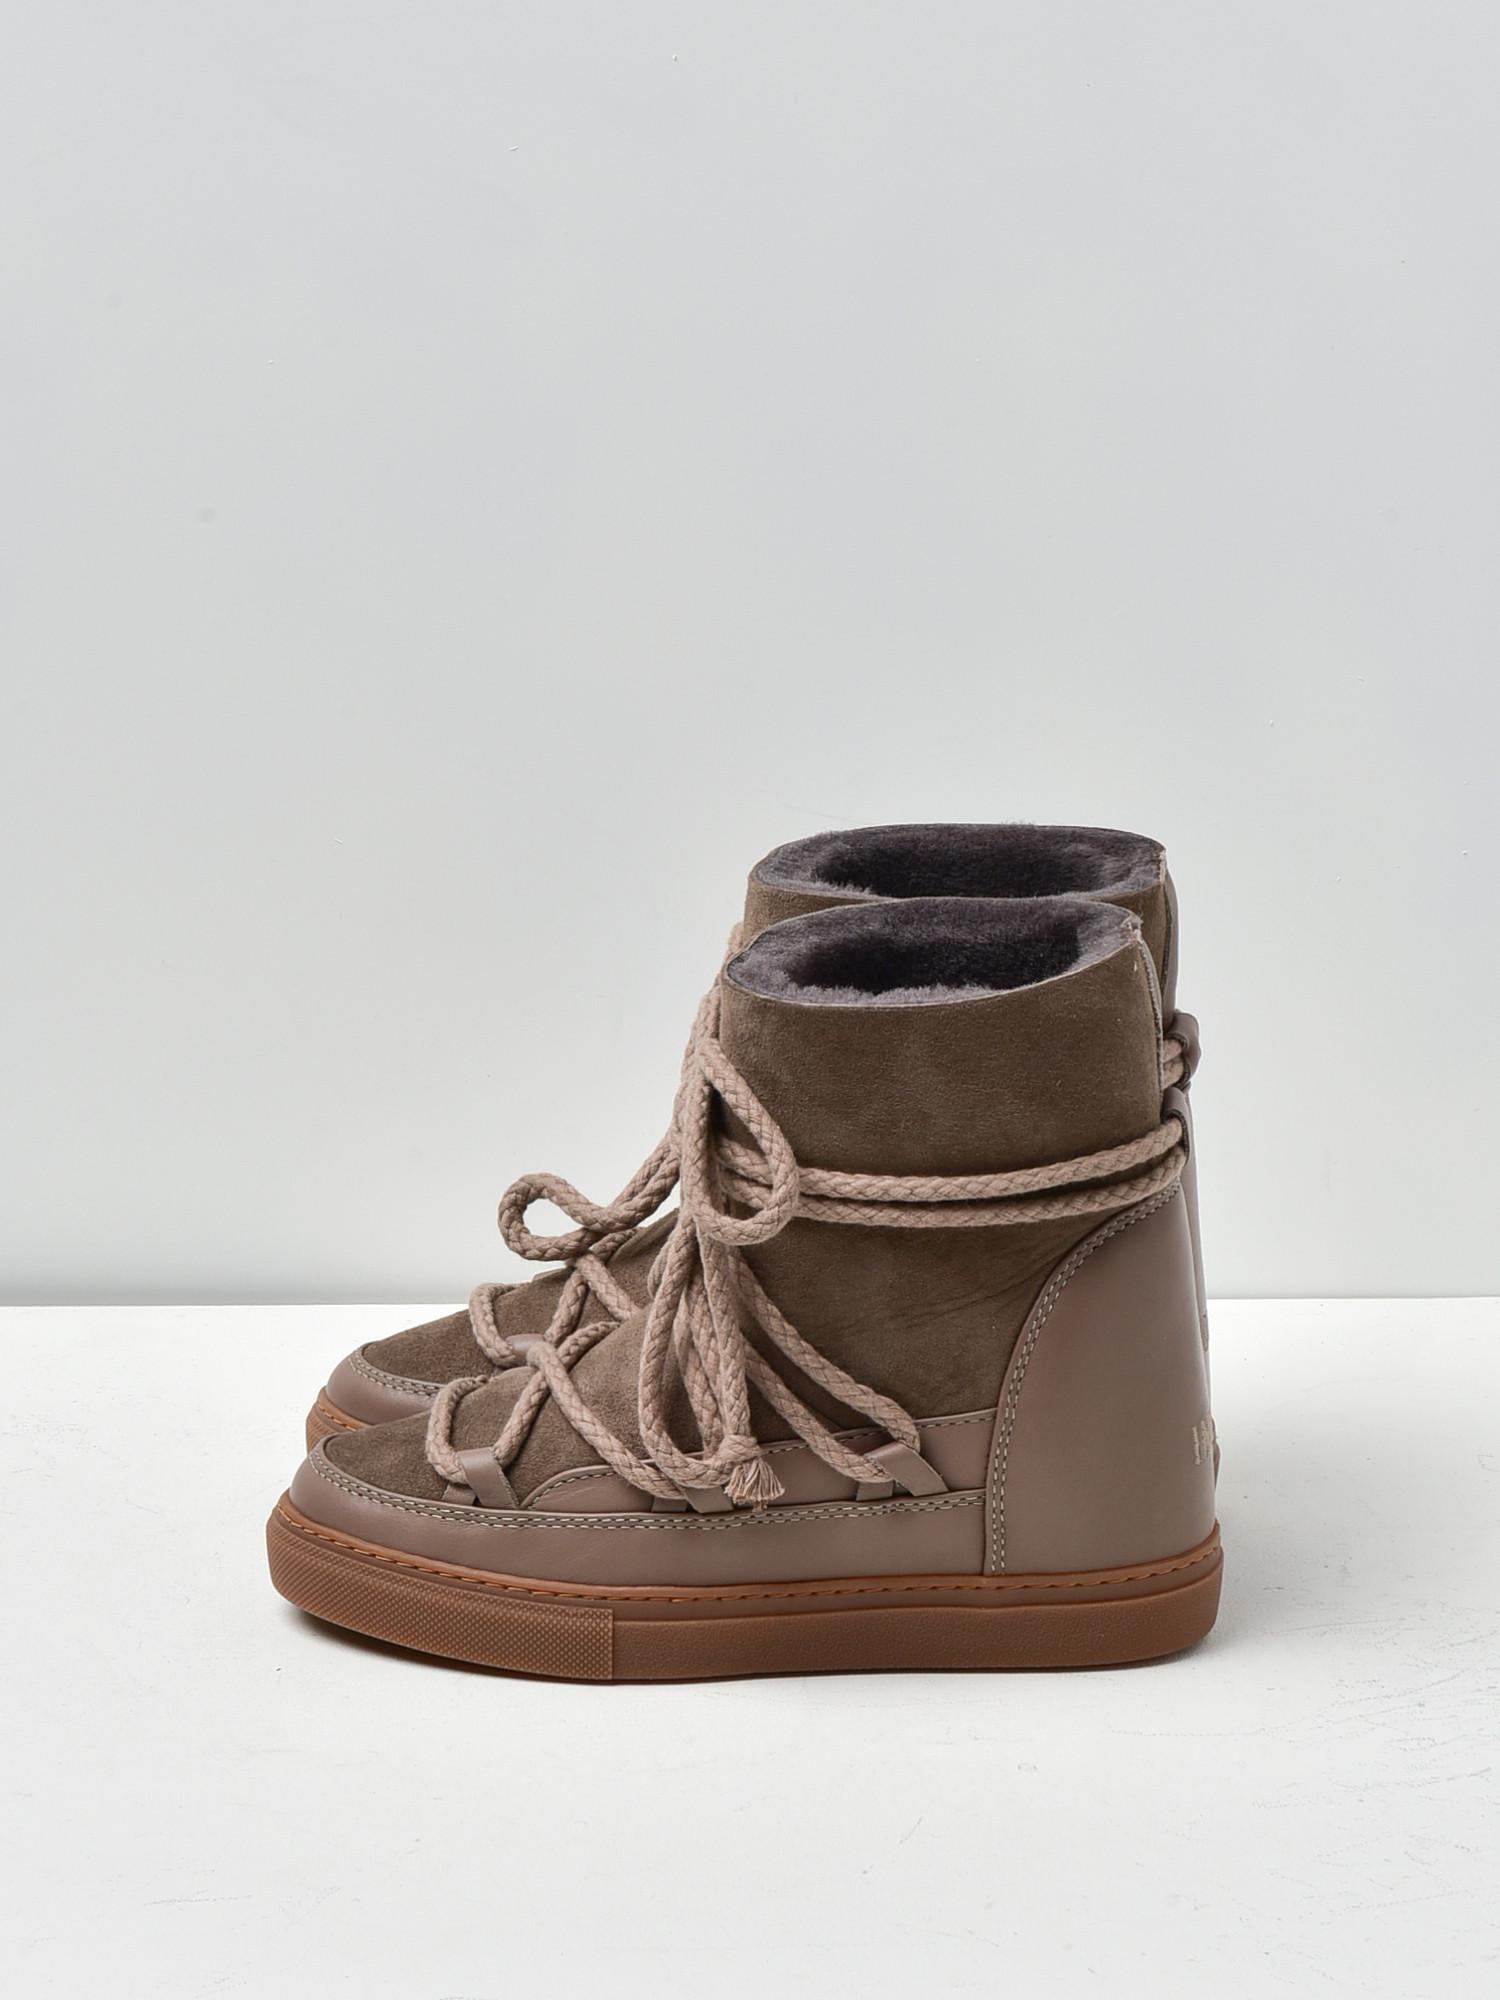 inuikii sneaker boots